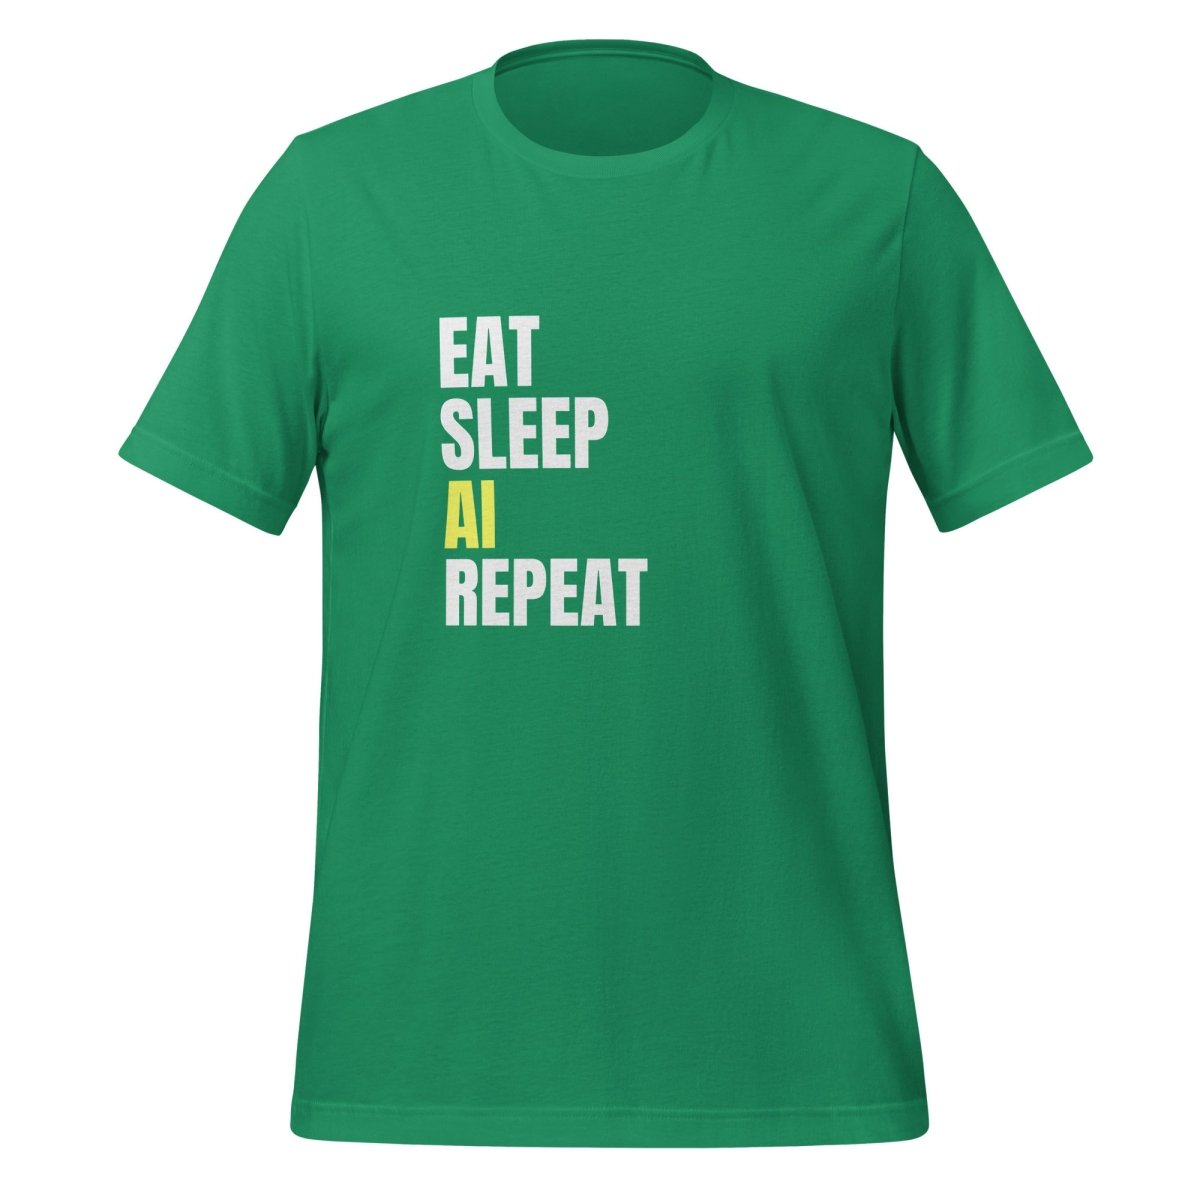 EAT SLEEP AI REPEAT T - Shirt 3 (unisex) - Kelly - AI Store